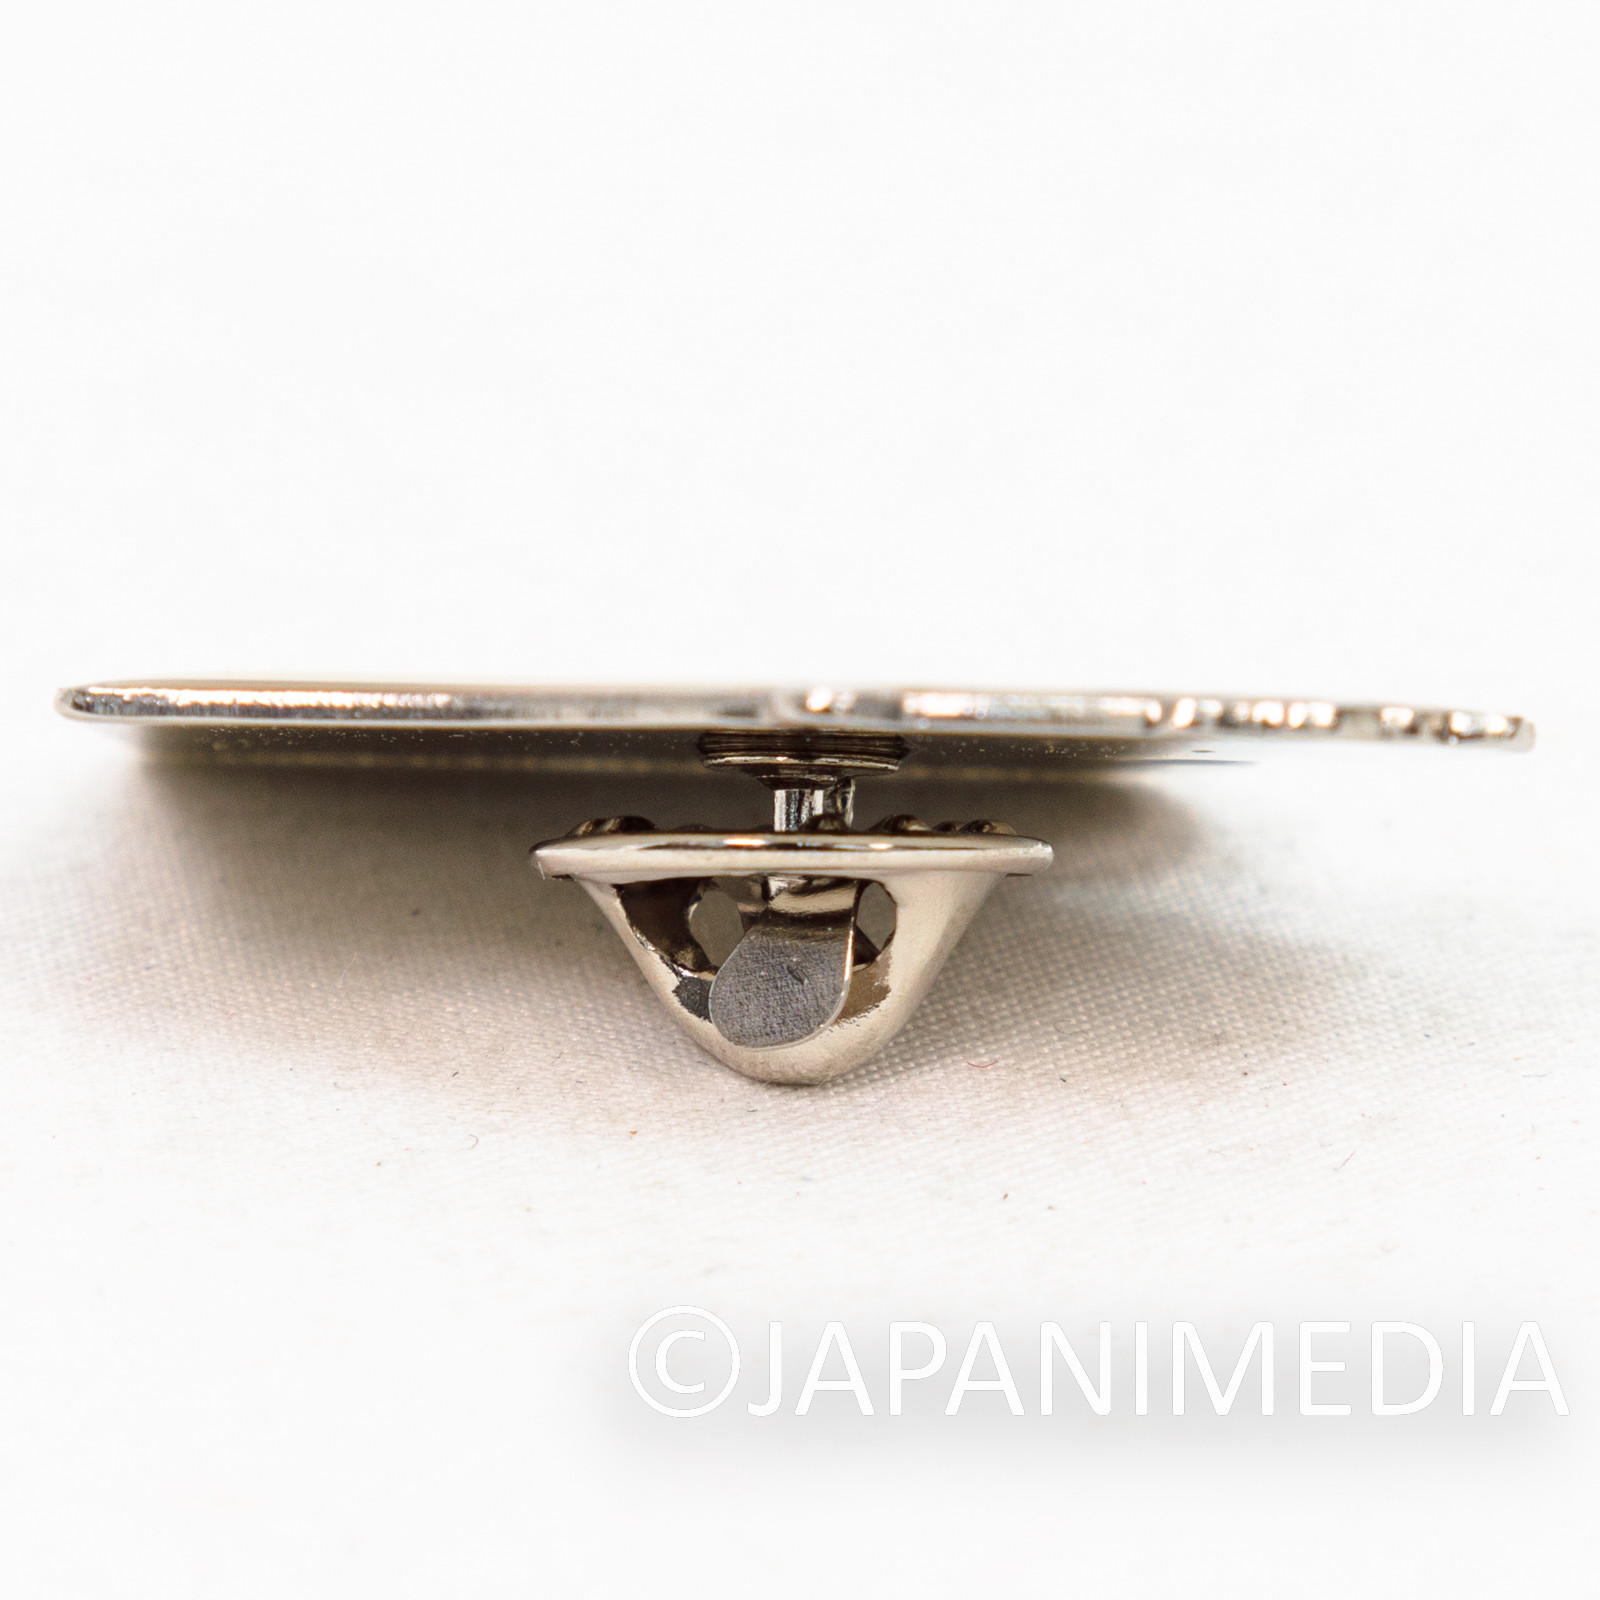 RARE! Inuyasha Metal Pins #2 JAPAN ANIME MANGA